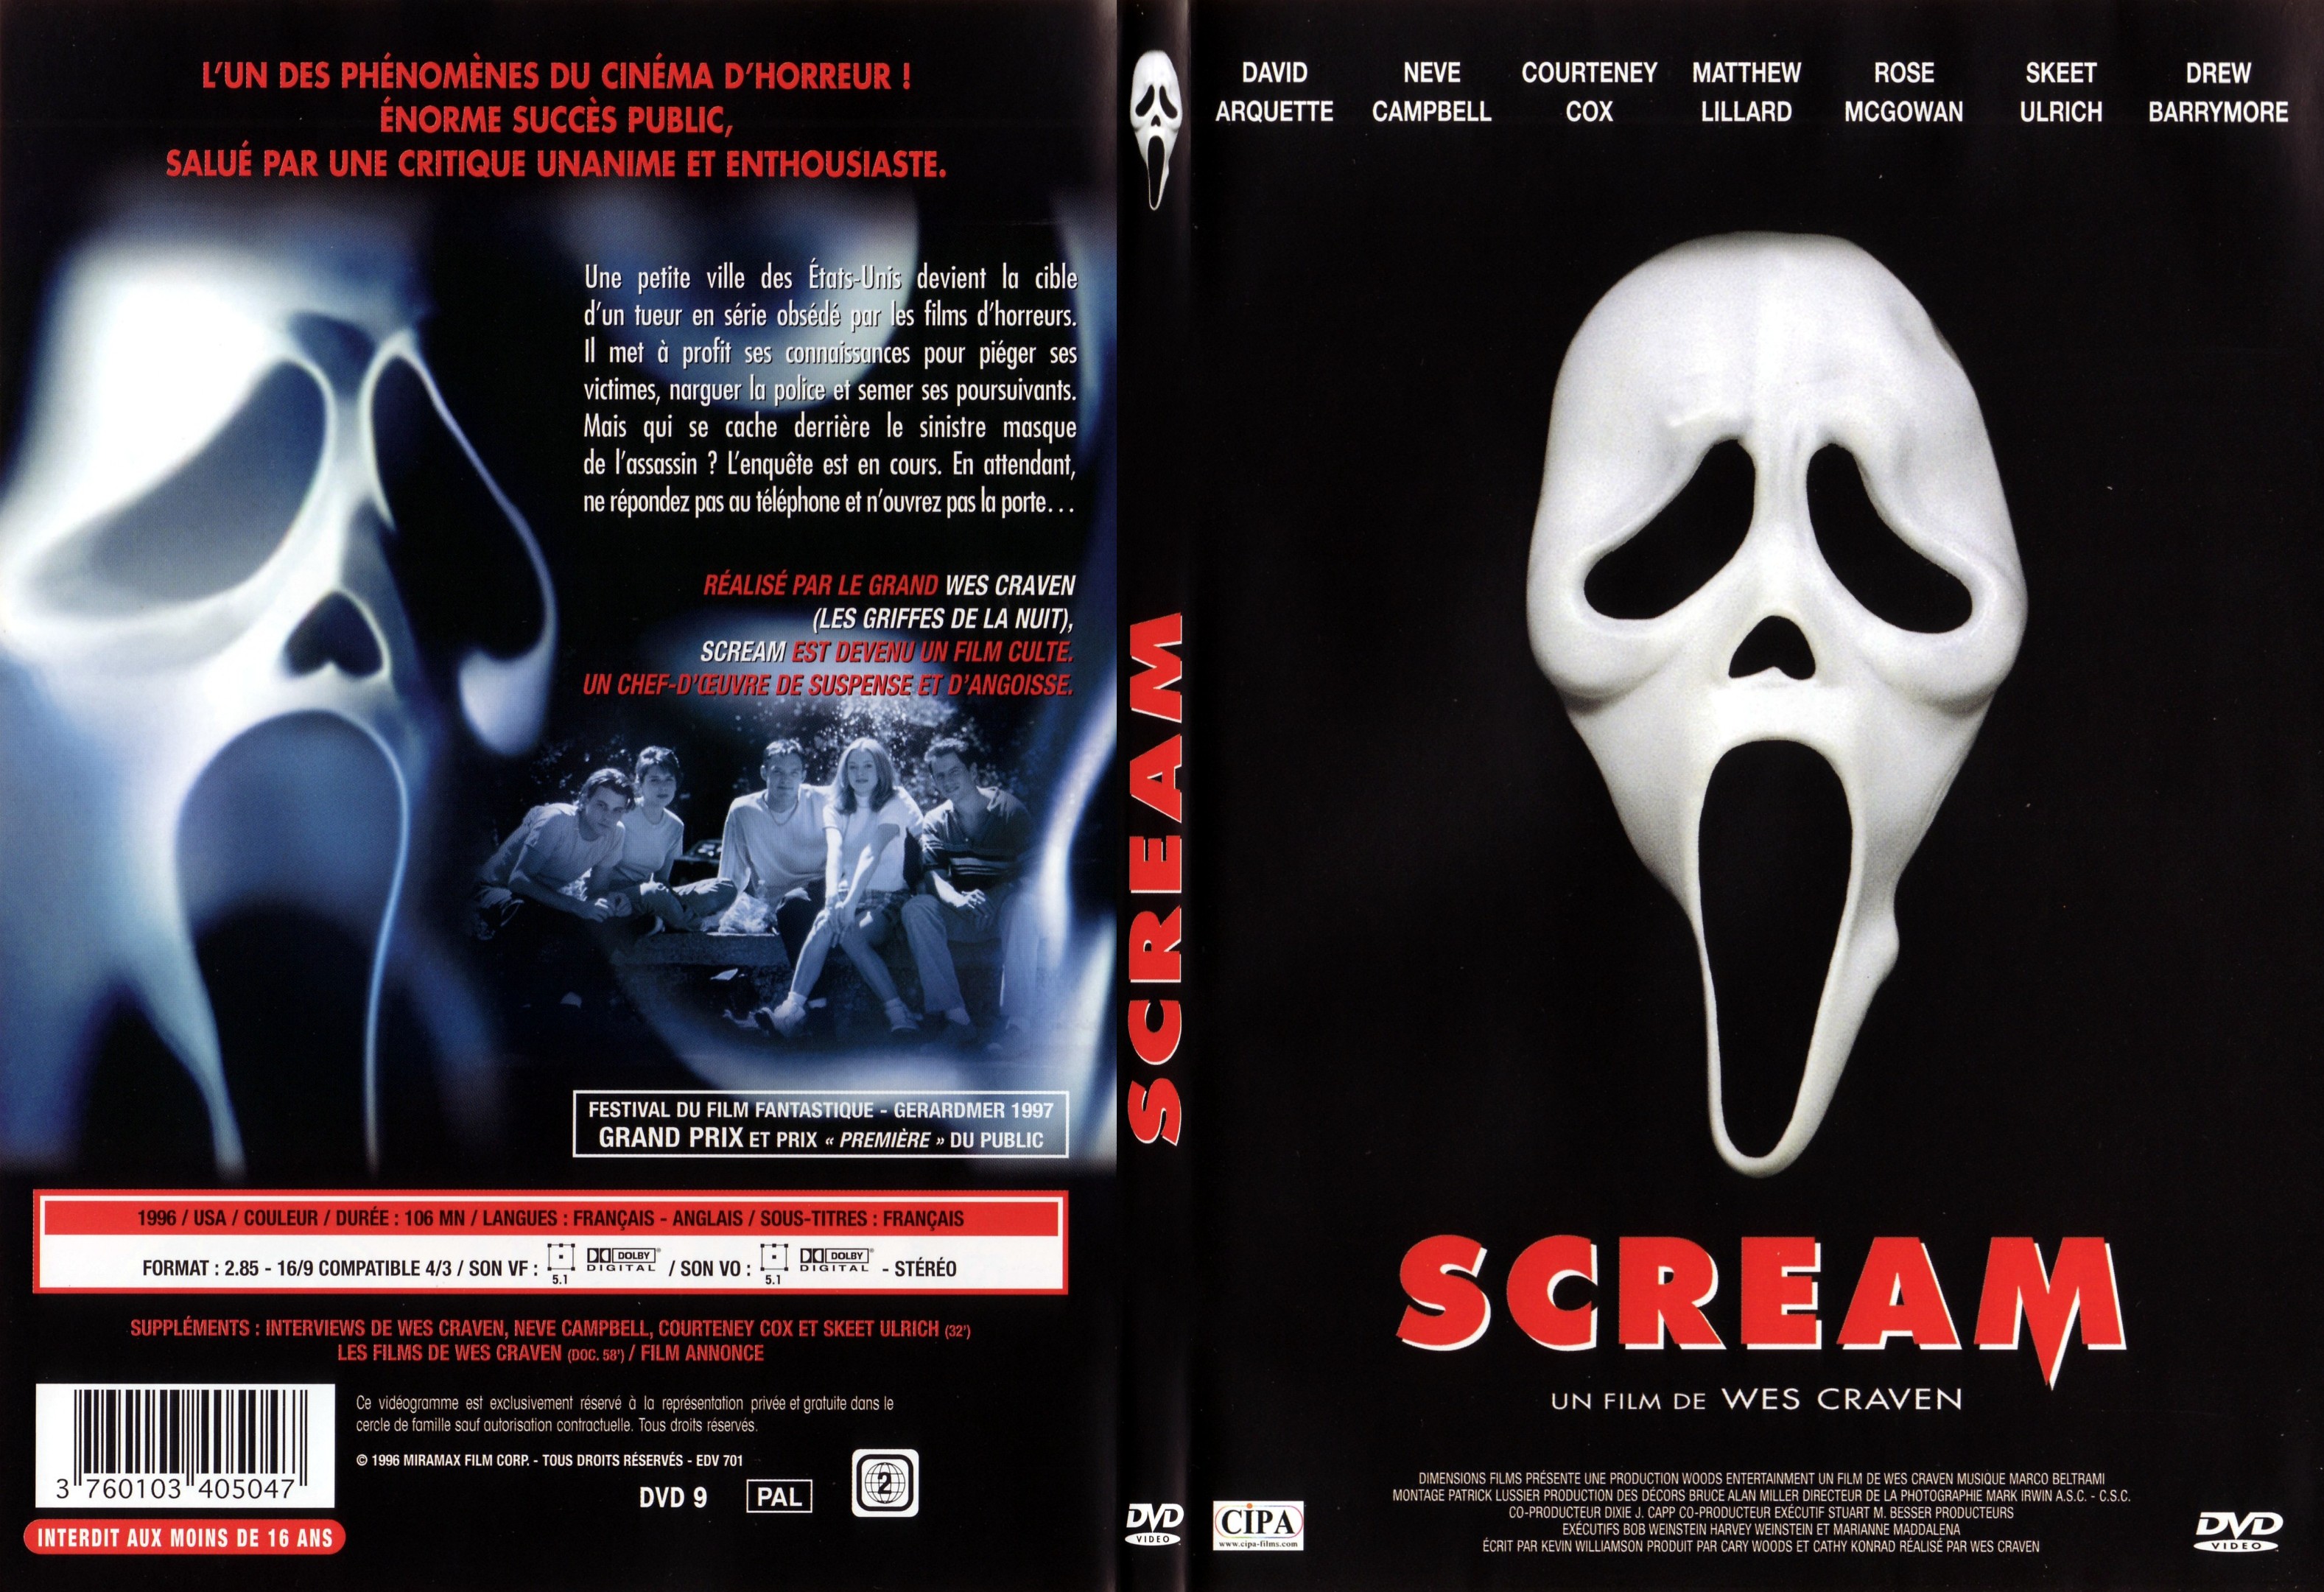 Jaquette DVD Scream - SLIM v2